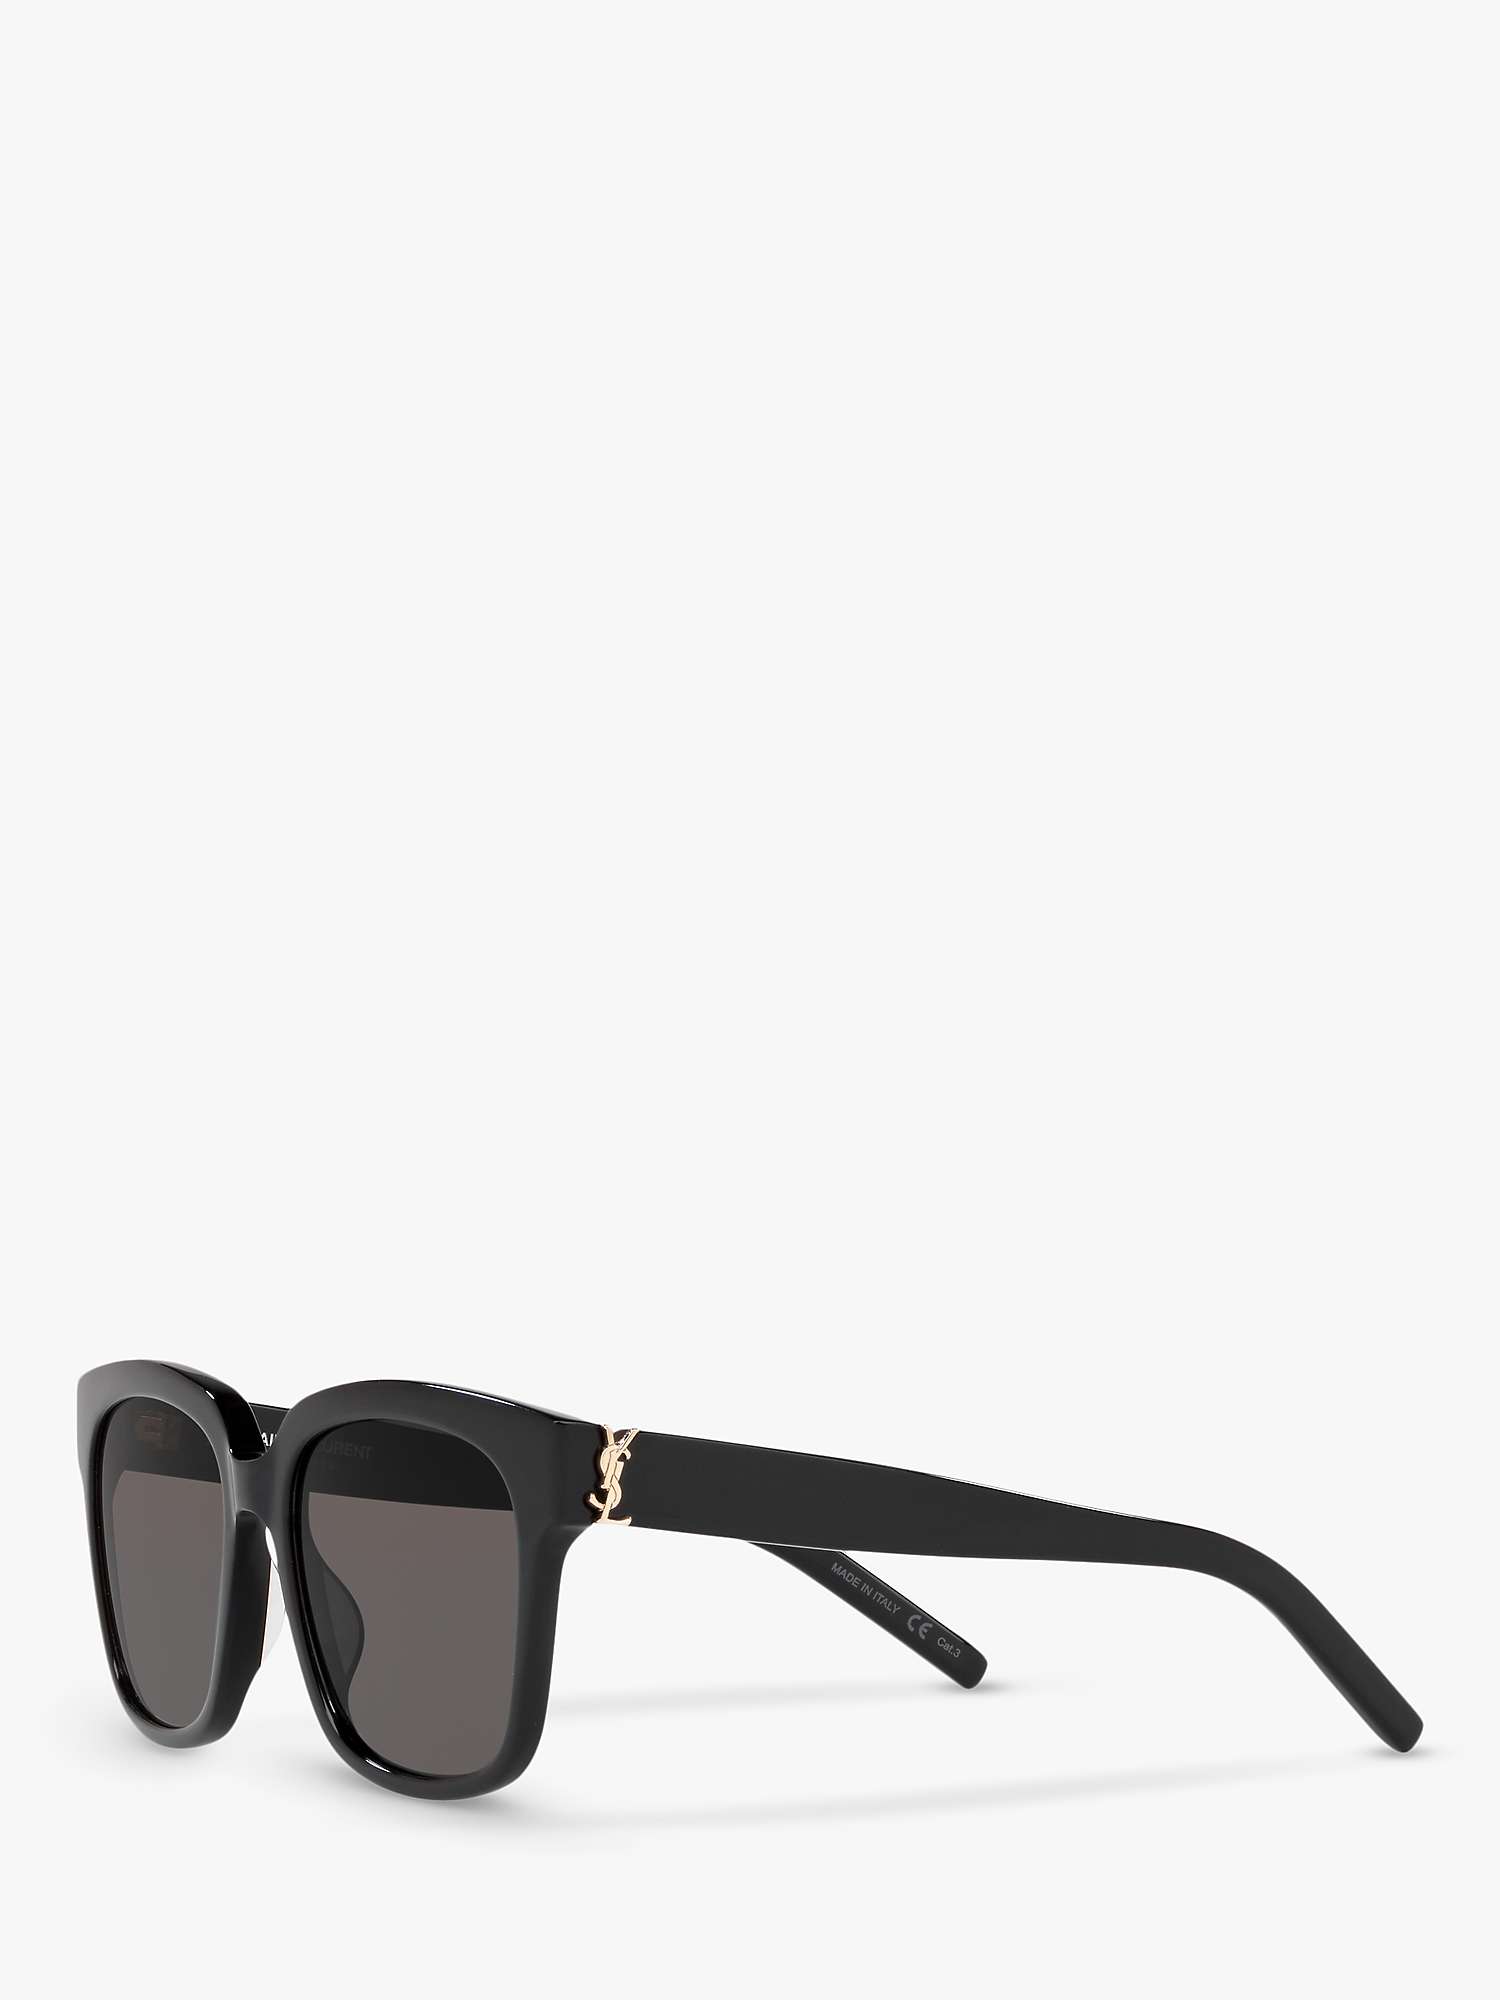 Buy Yves Saint Laurent SL M40 Women's Square Sunglasses, Black/Grey Online at johnlewis.com